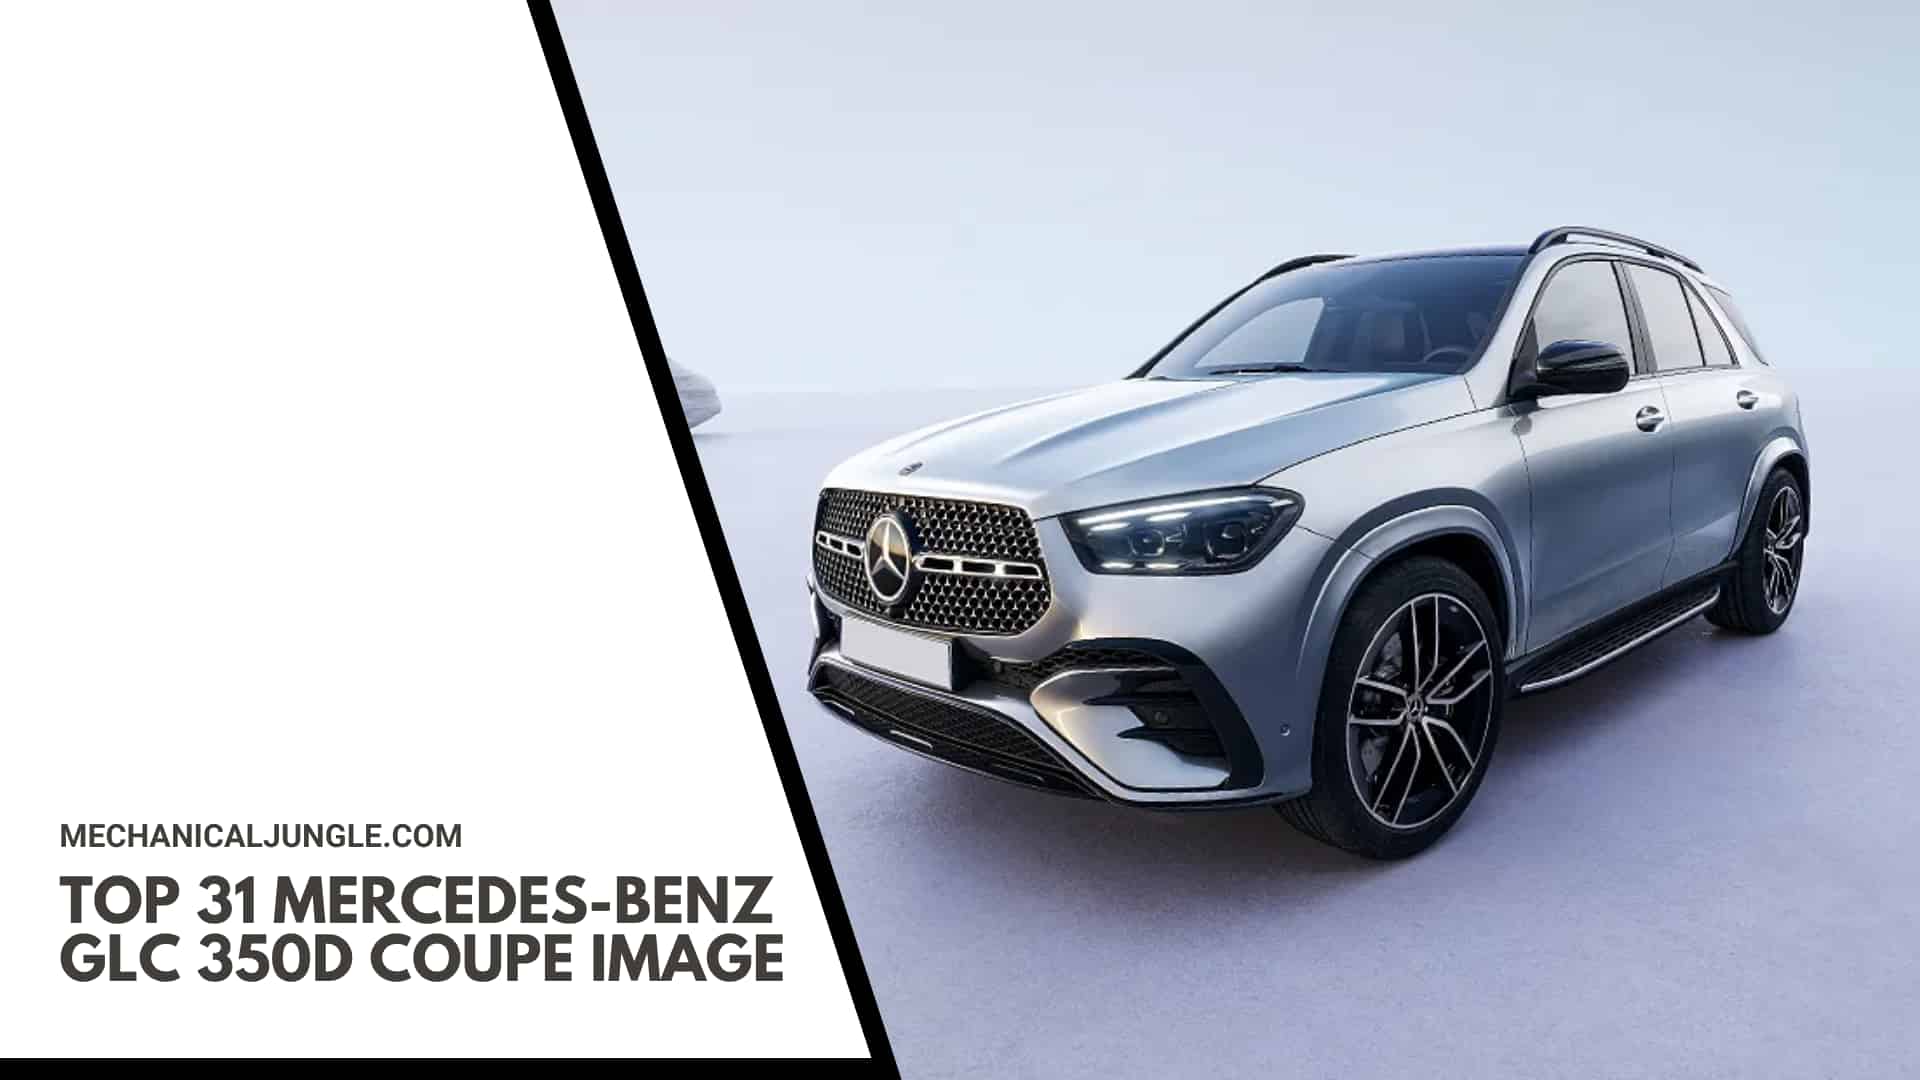 Top 31 Mercedes-Benz GLC 350d Coupe Image